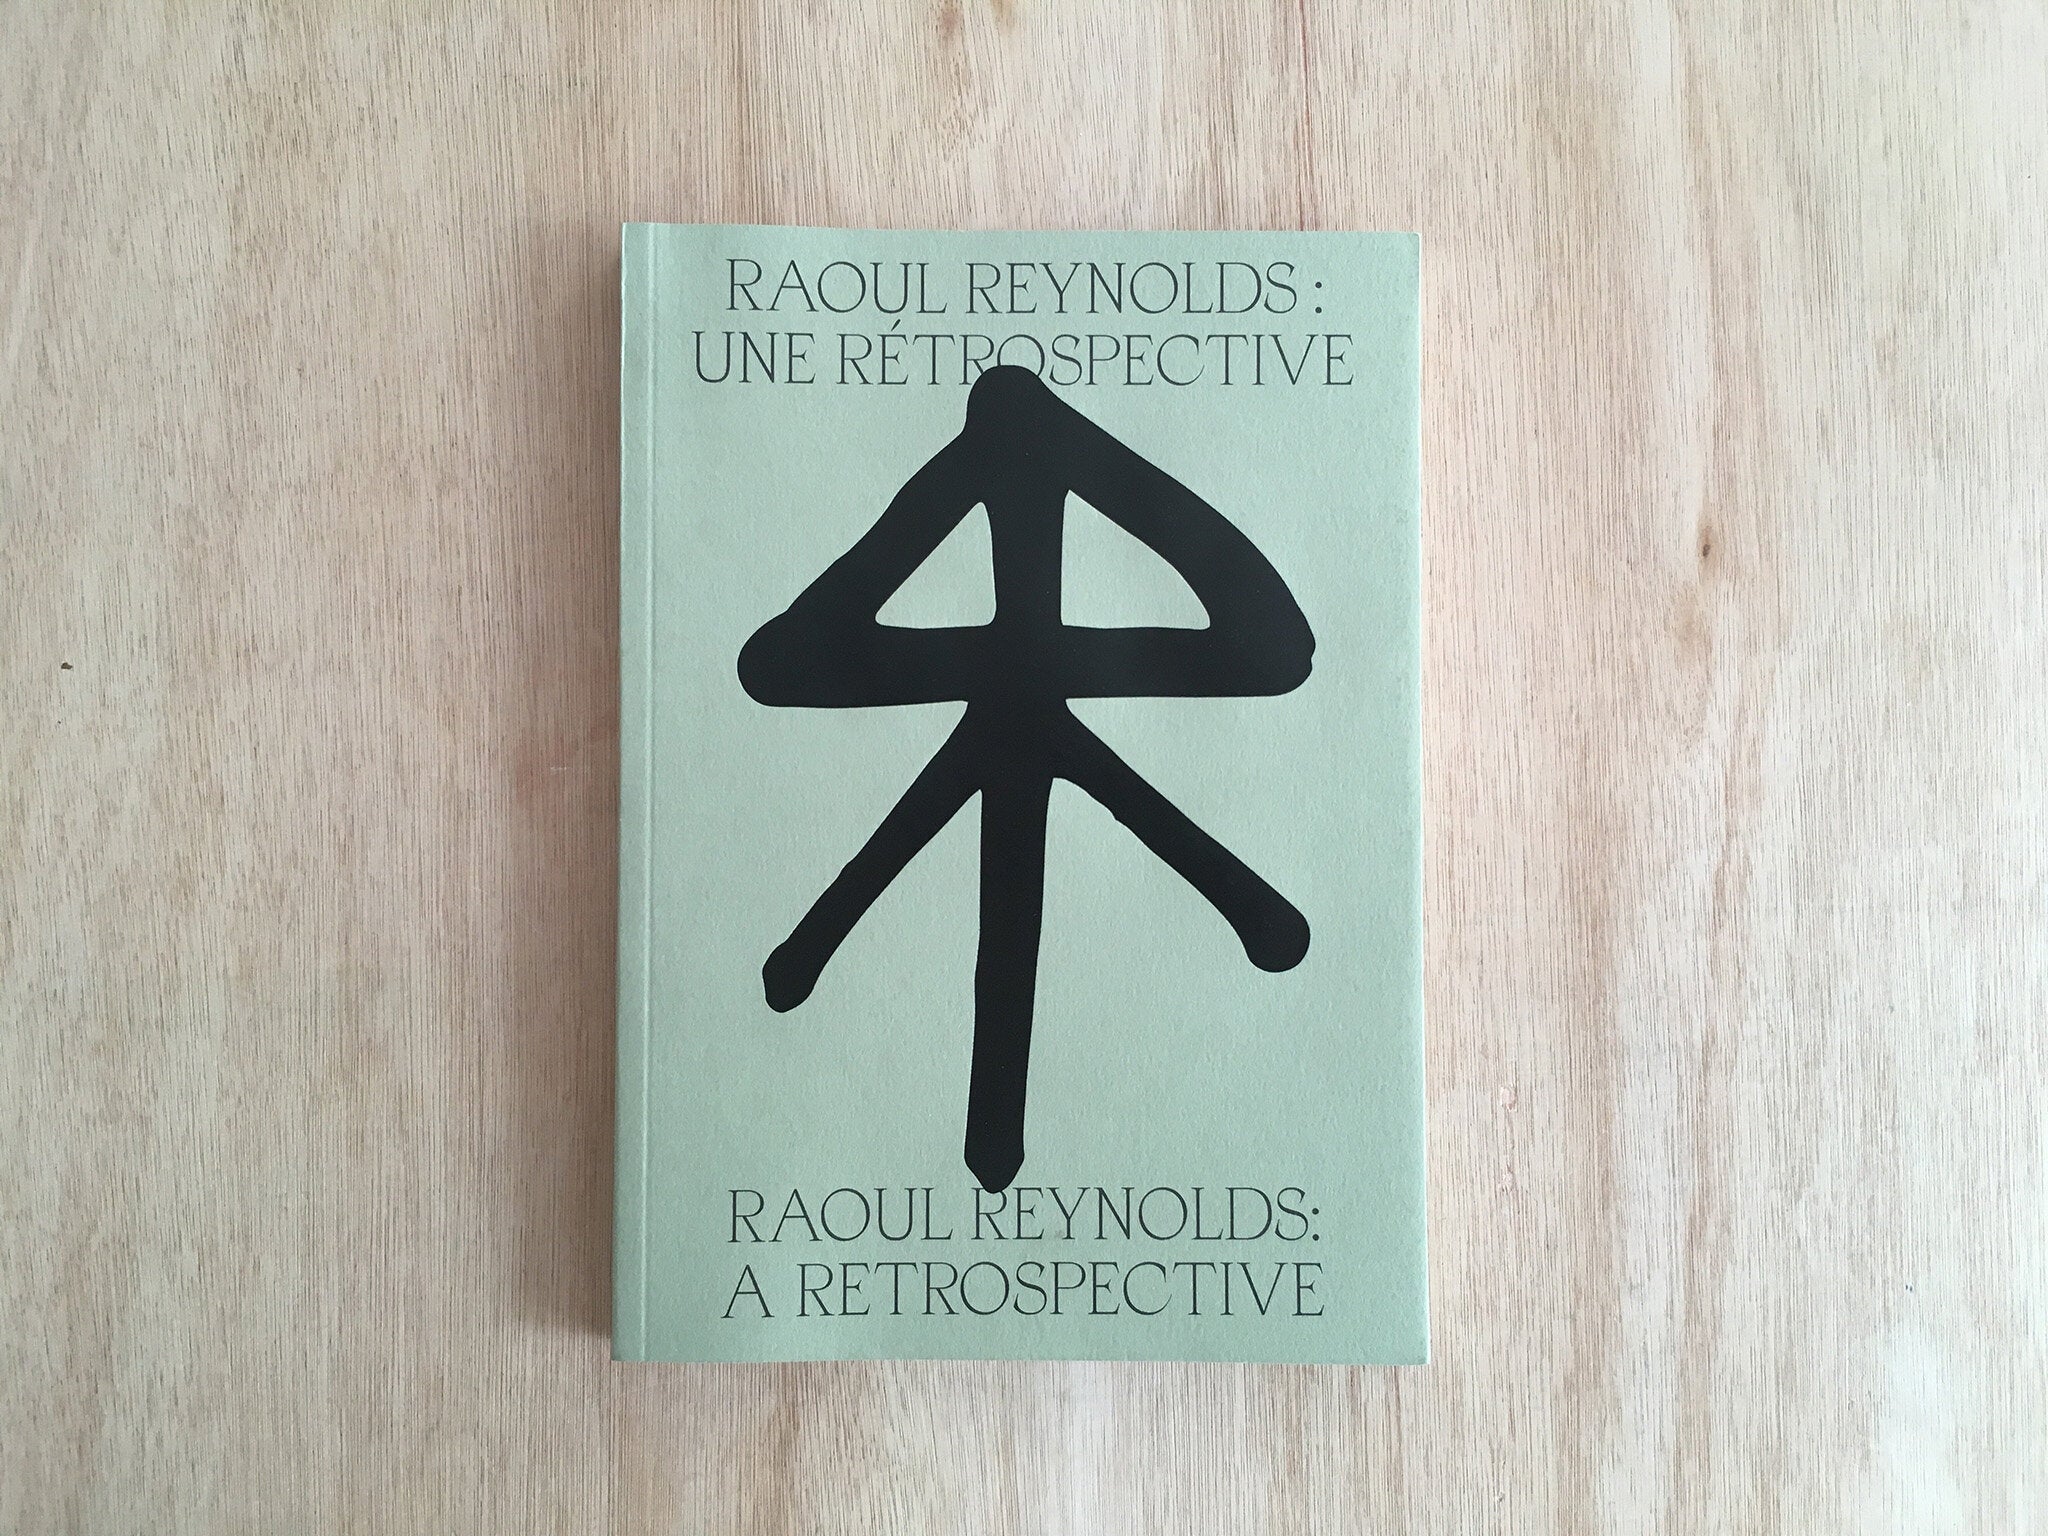 RAOUL REYNOLDS: A RETROSPECTIVE